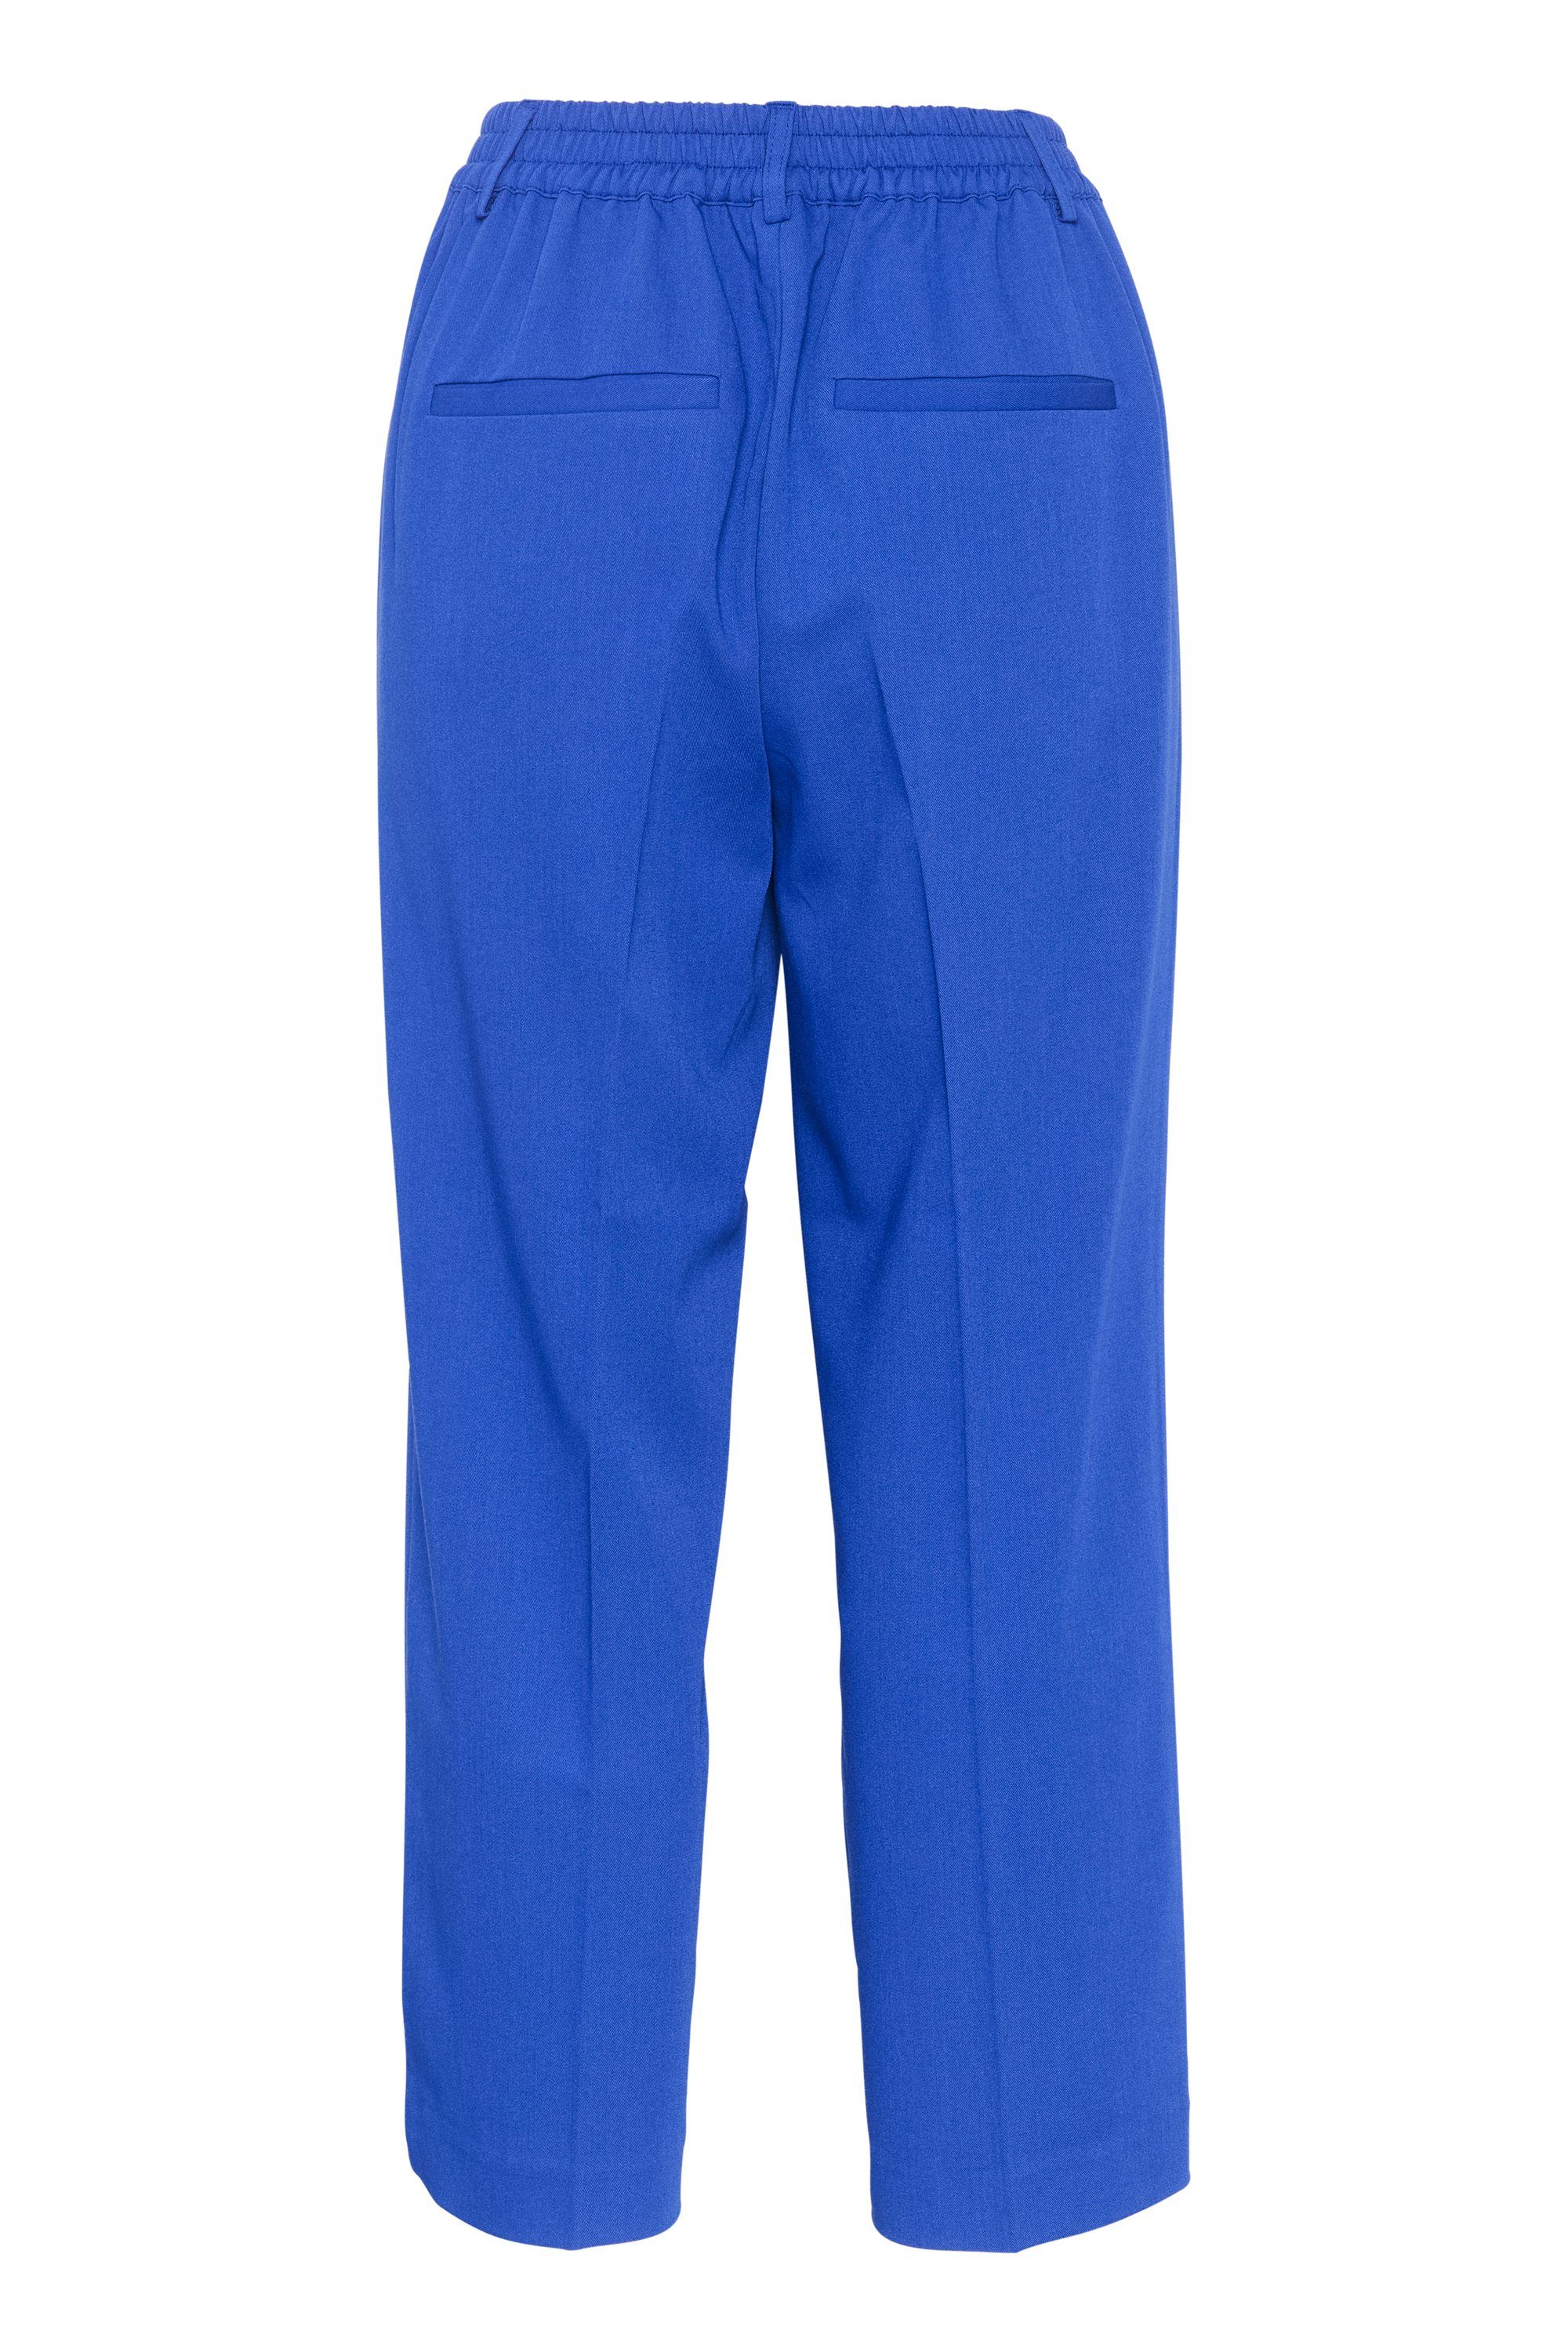 KAFFE Anzughose Pants Blue KAsakura Suiting Clematis